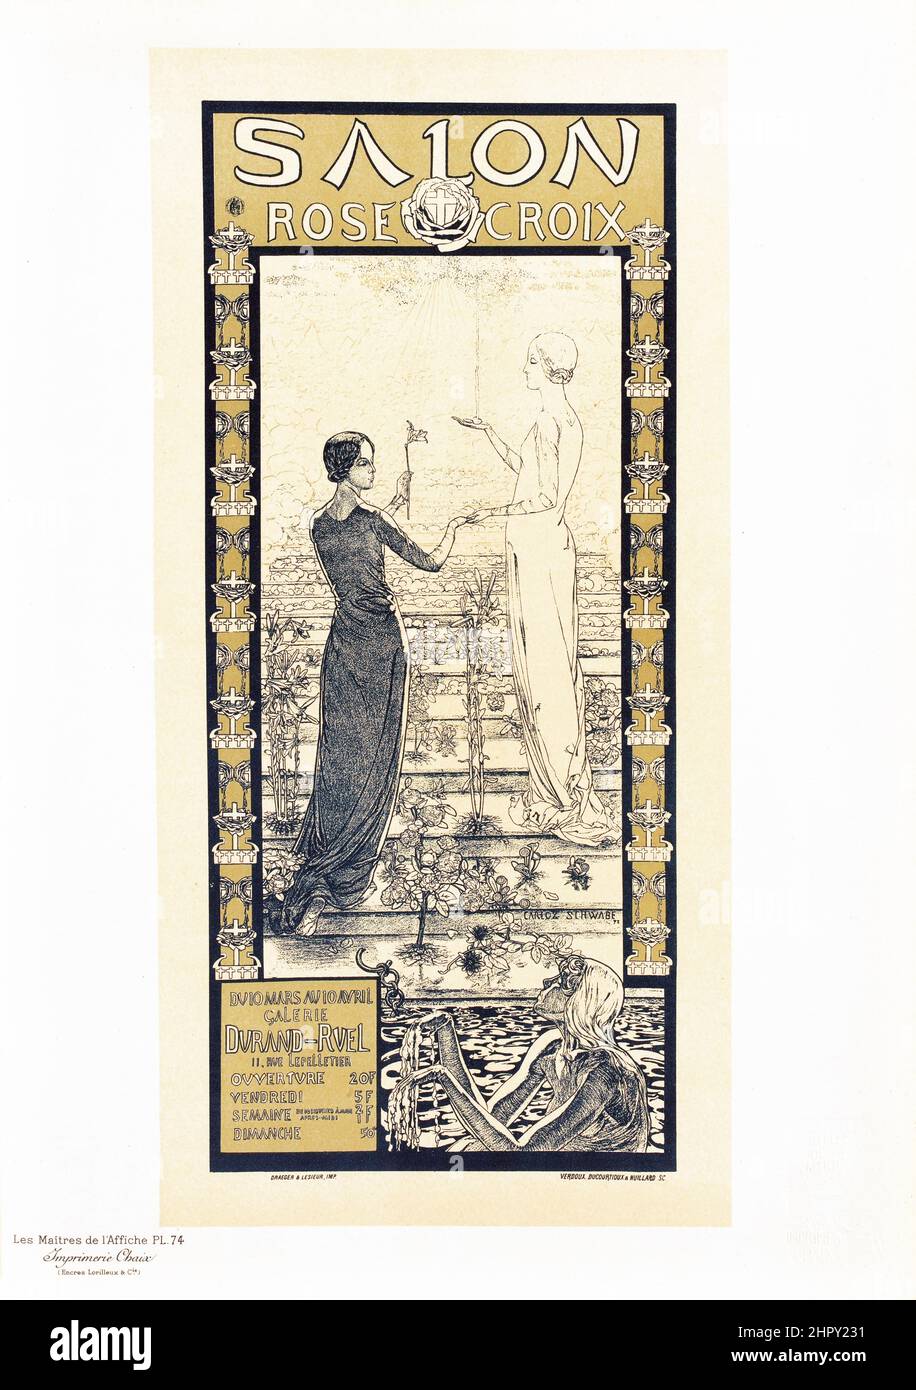 Maitres de l'affiche Vol 2 - piatto 74 - Carlos Schwabe - Salon Rose Croix. 1897. Foto Stock